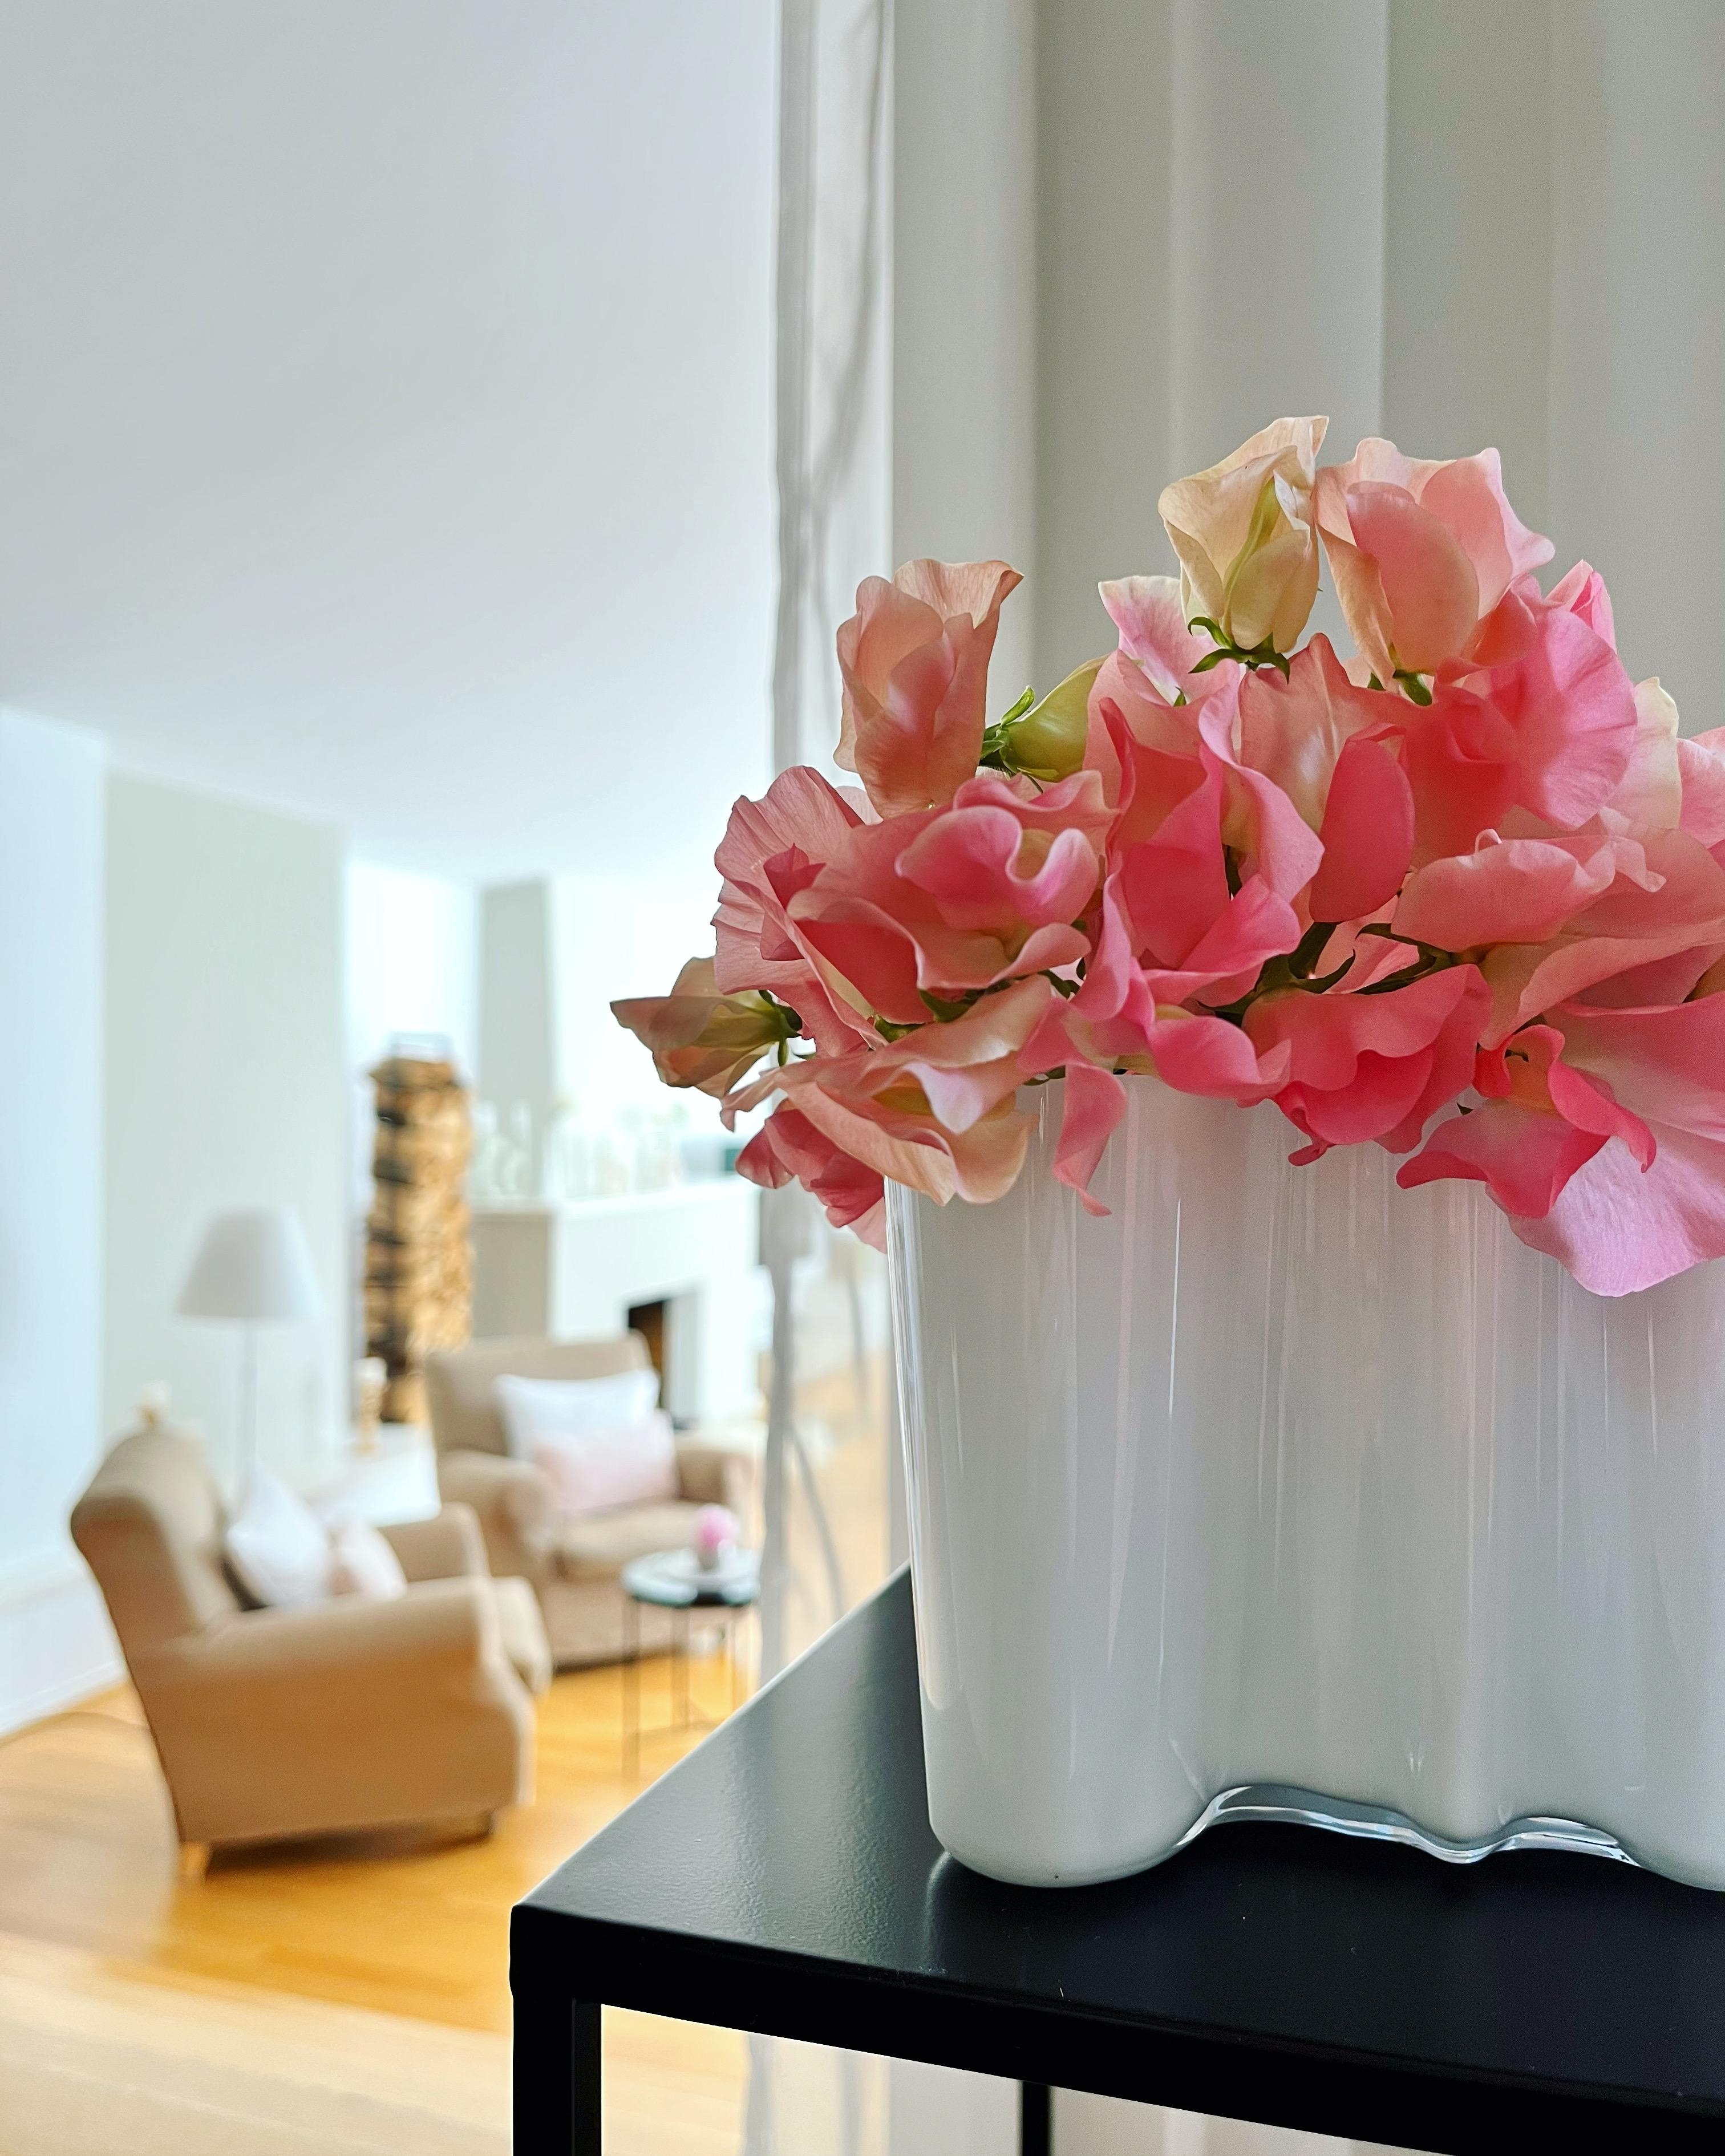 Ich liebe Wicken! 🥰
#wicken #flowers #vase #livingroom